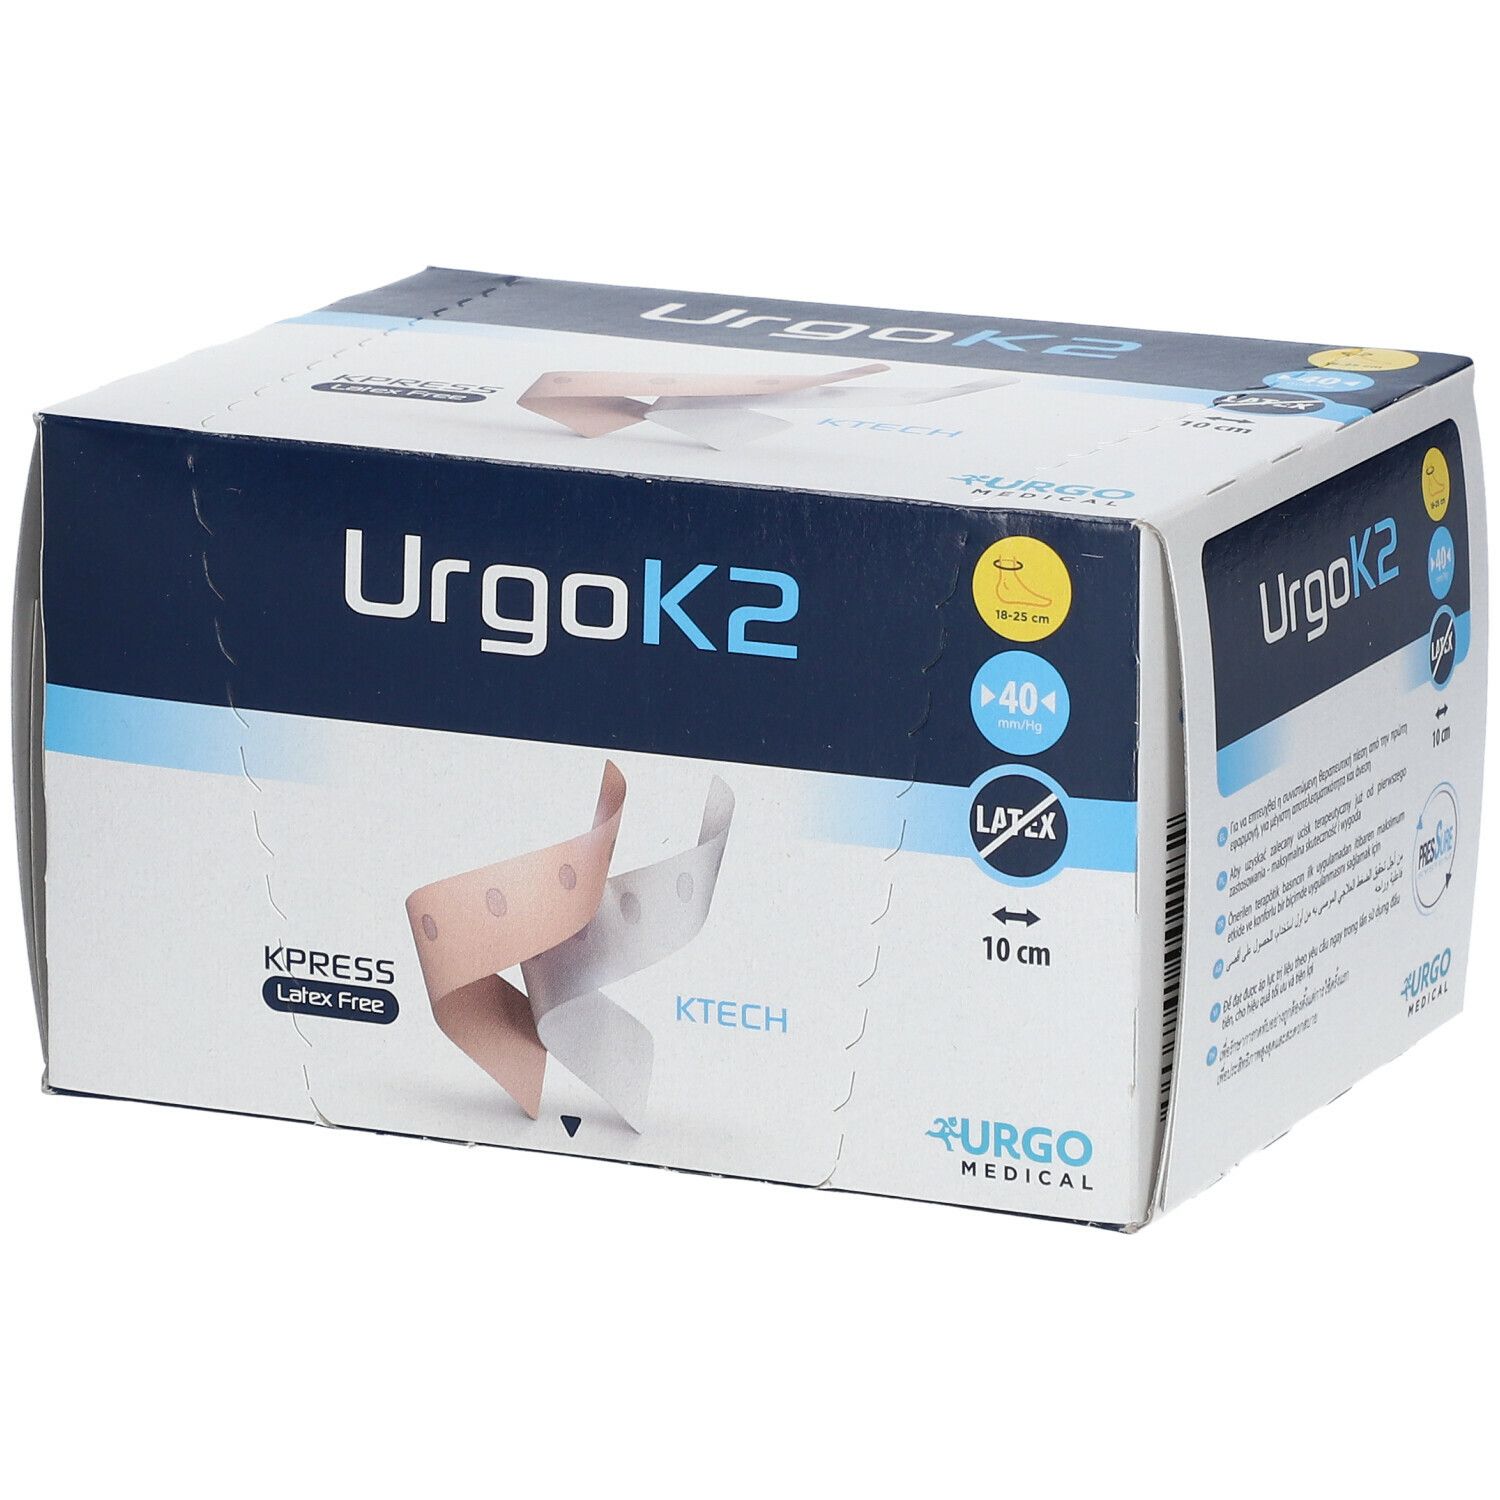 UrgoK2 Latex Free 7,15 m x 10 cm